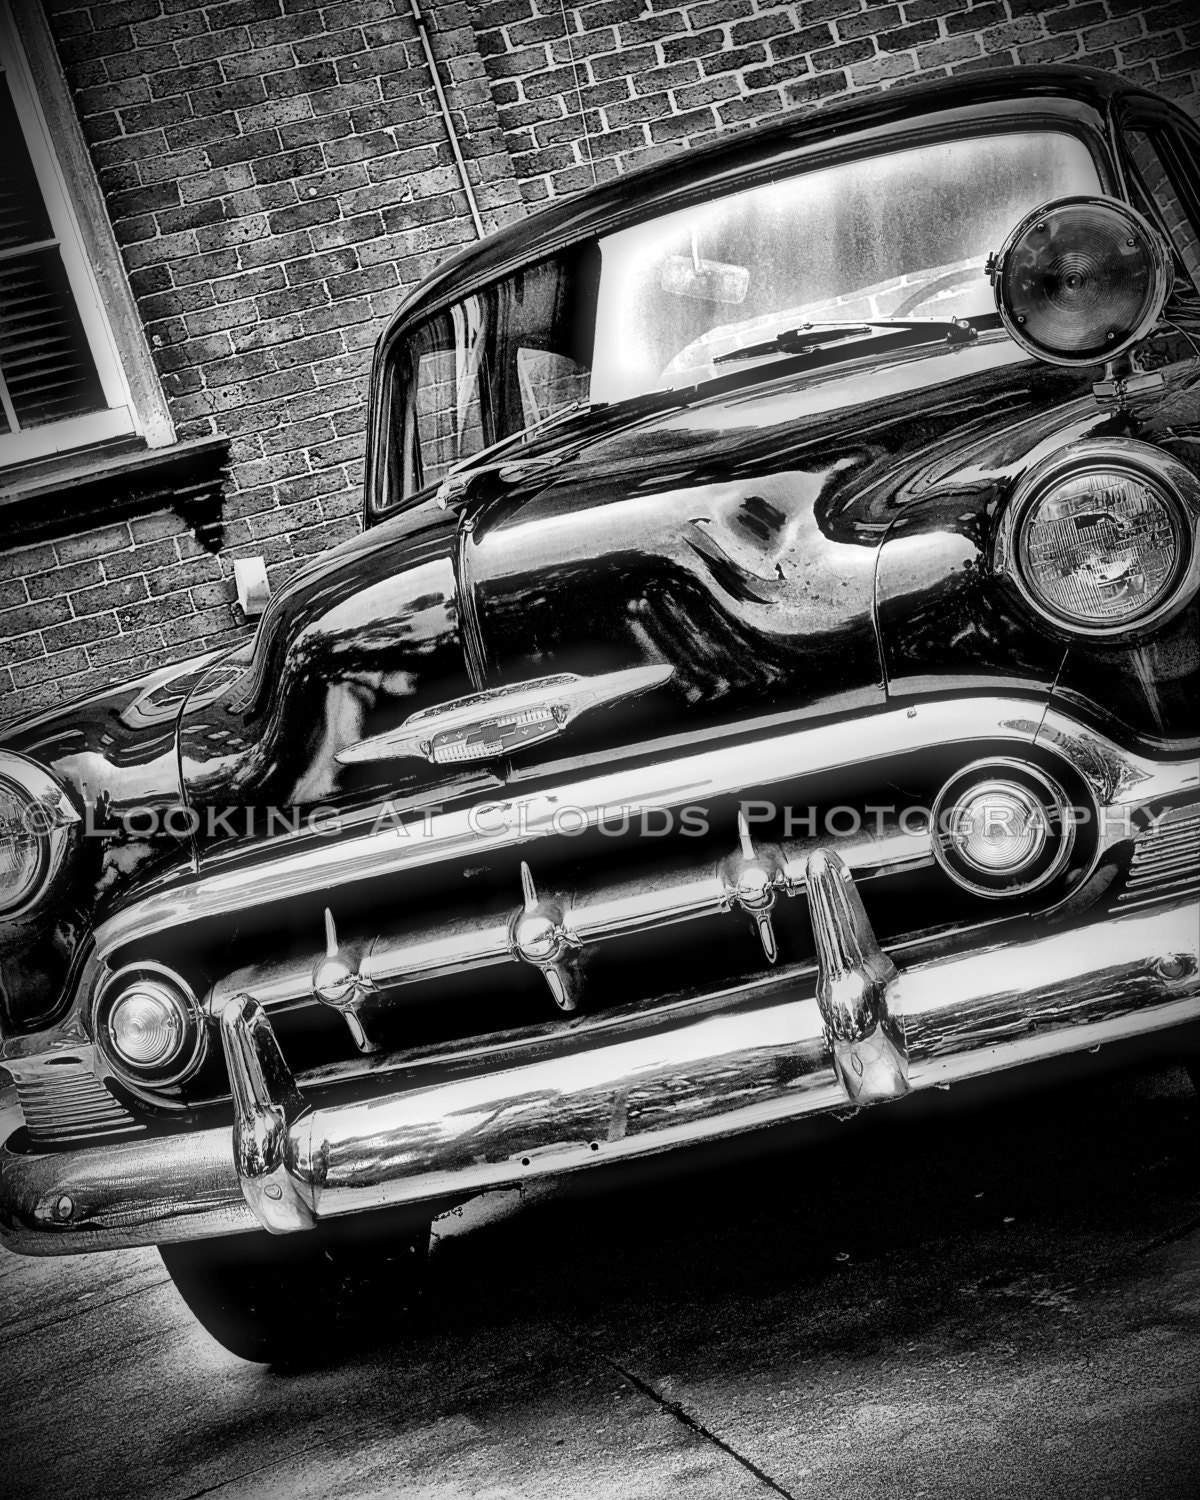 classic car art - vintage Chevy - sharp art photo  8 x 10 black and white - vintage car decor - retro style noir wall decor